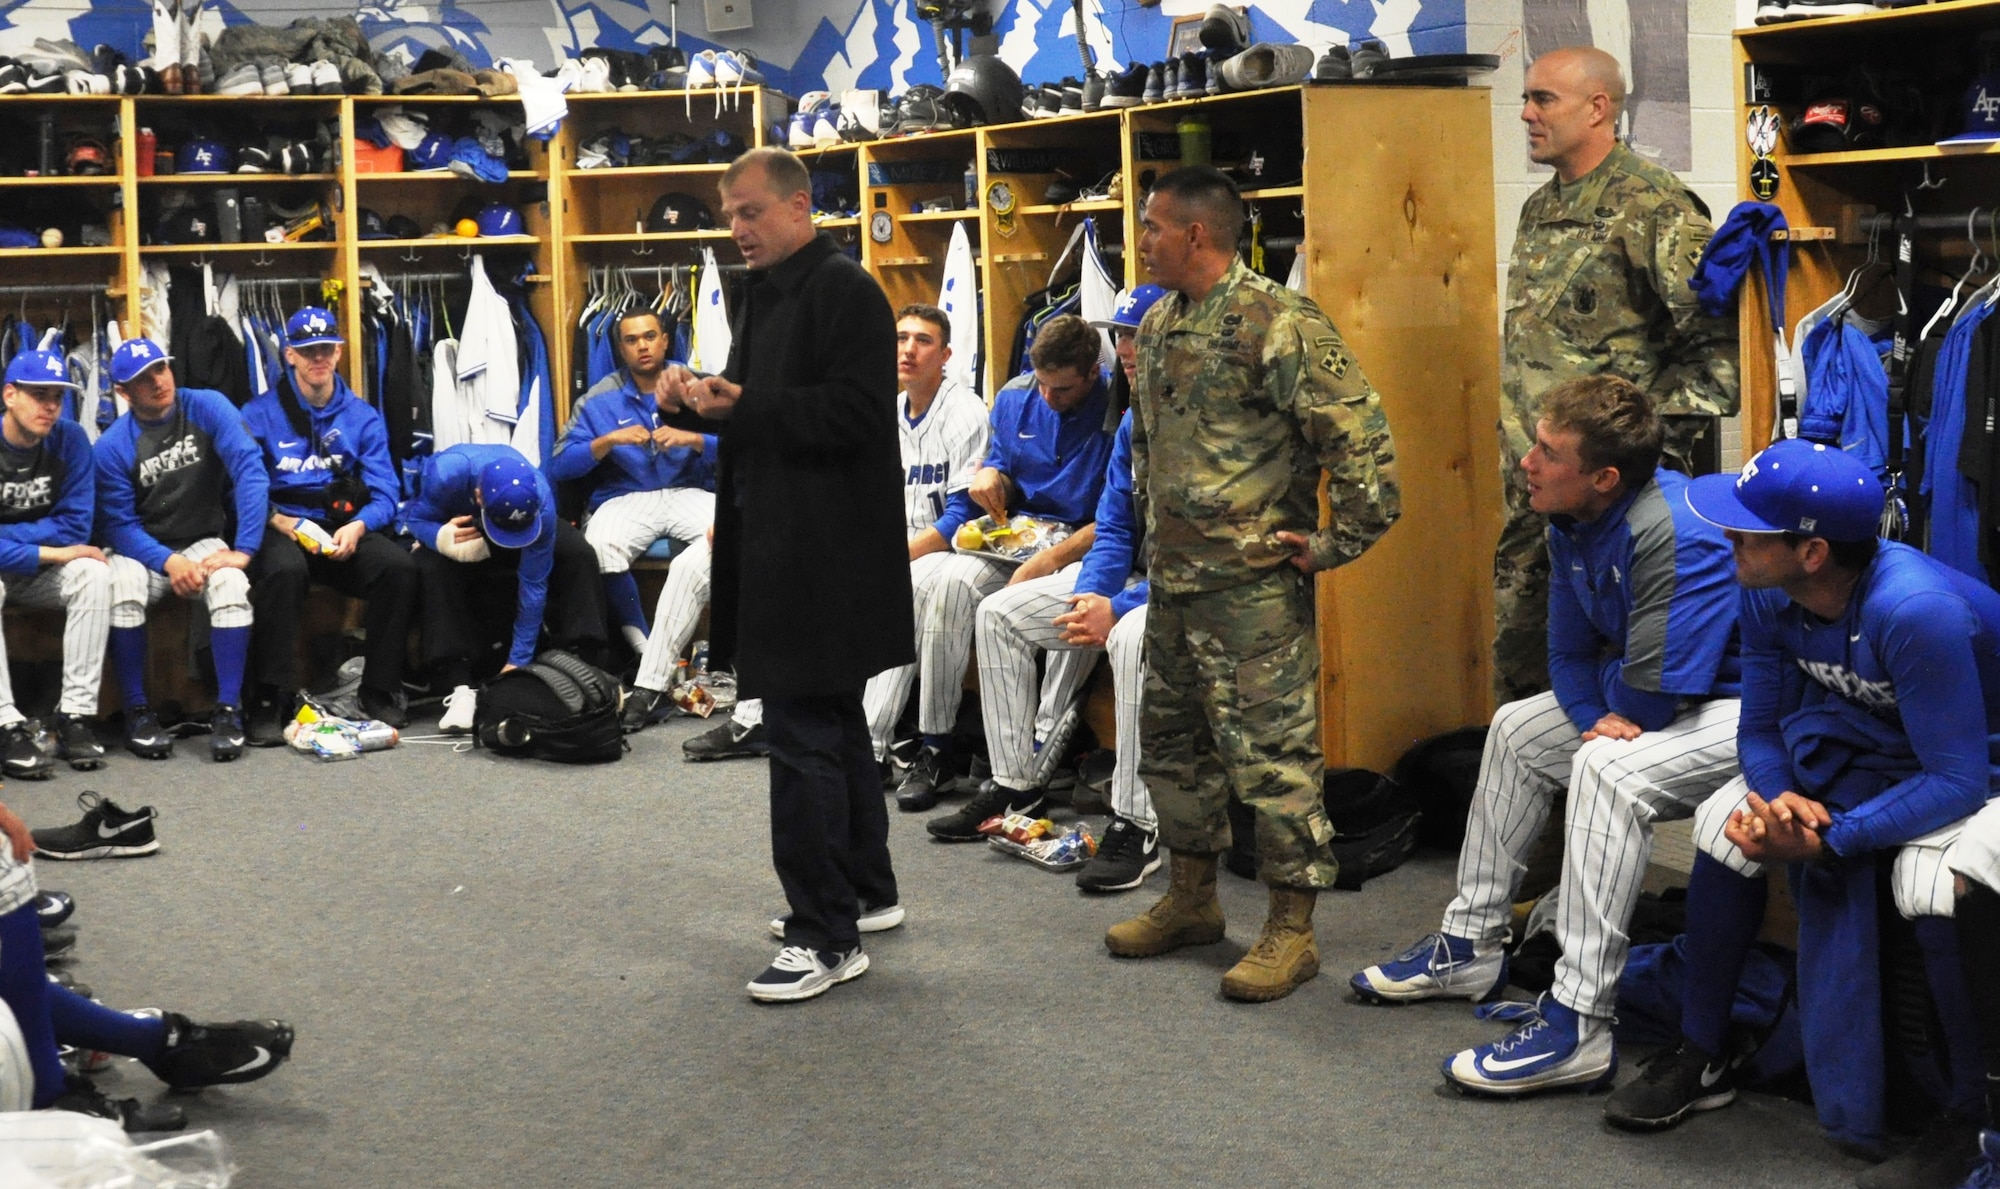 Soldiers, baseball champ Eckstein visit cadet athletes > United